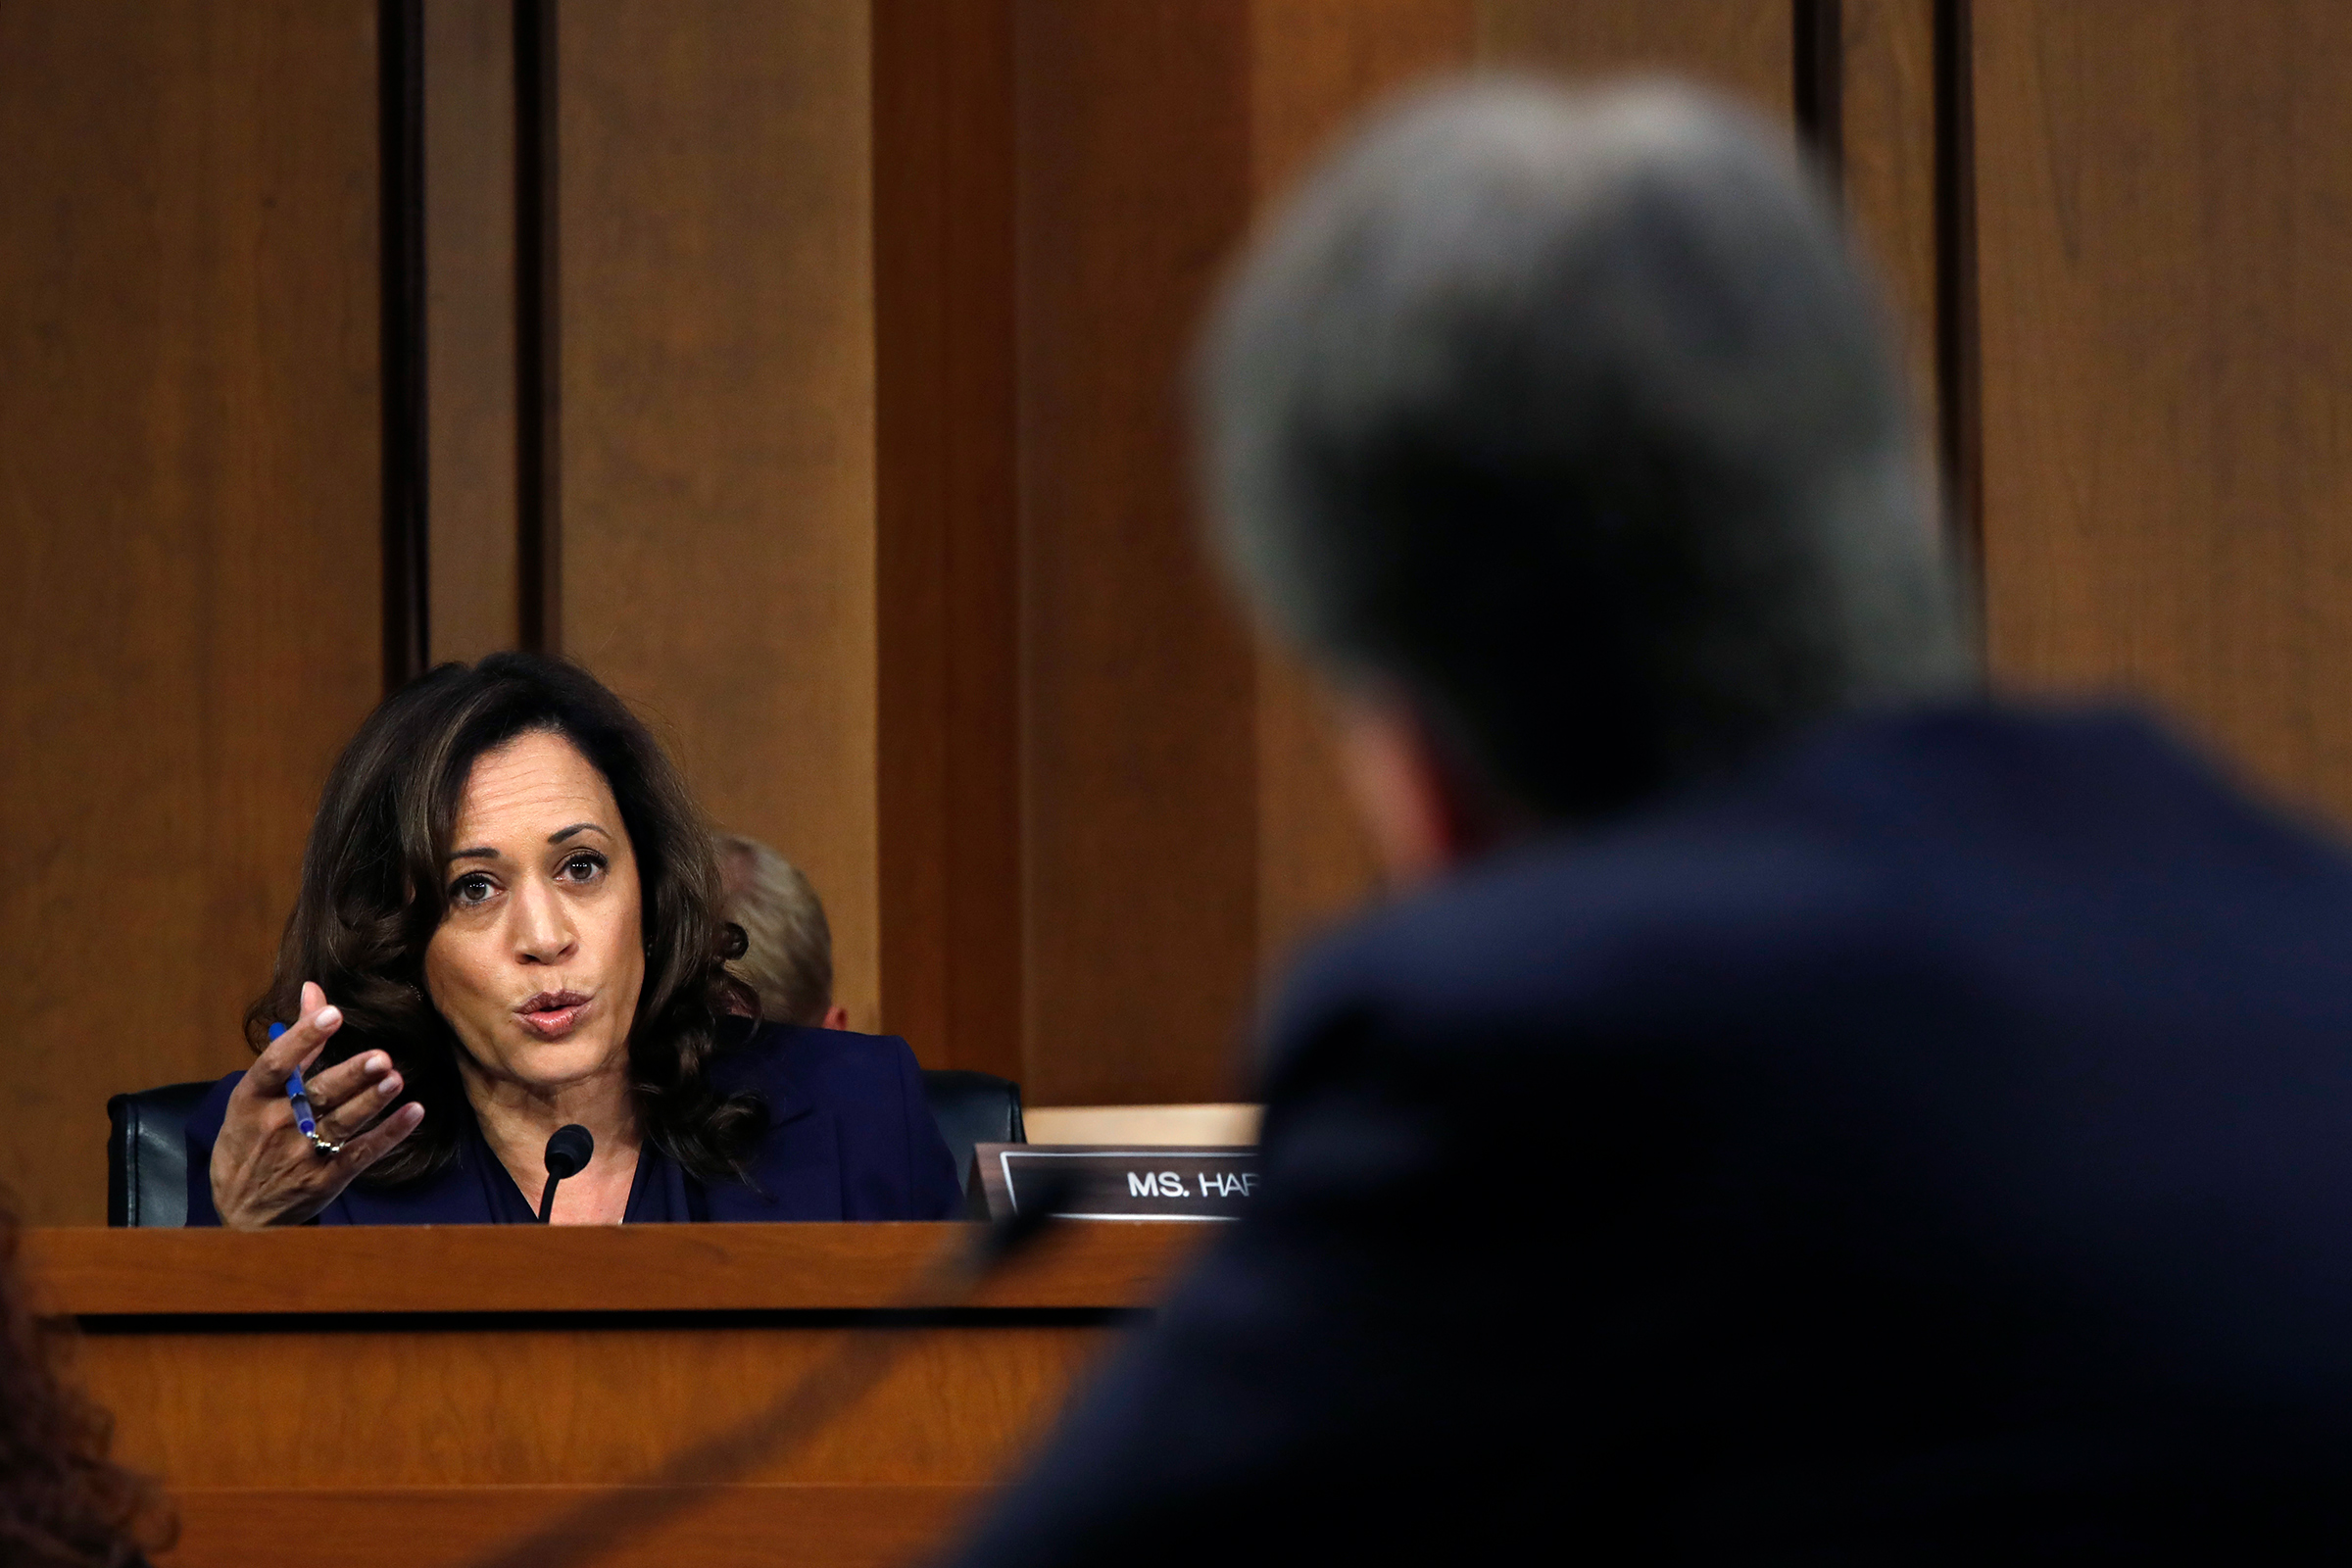 Harris rose in Senate hearings, grilling Supreme Court nominee Brett Kavanaugh in September 2018